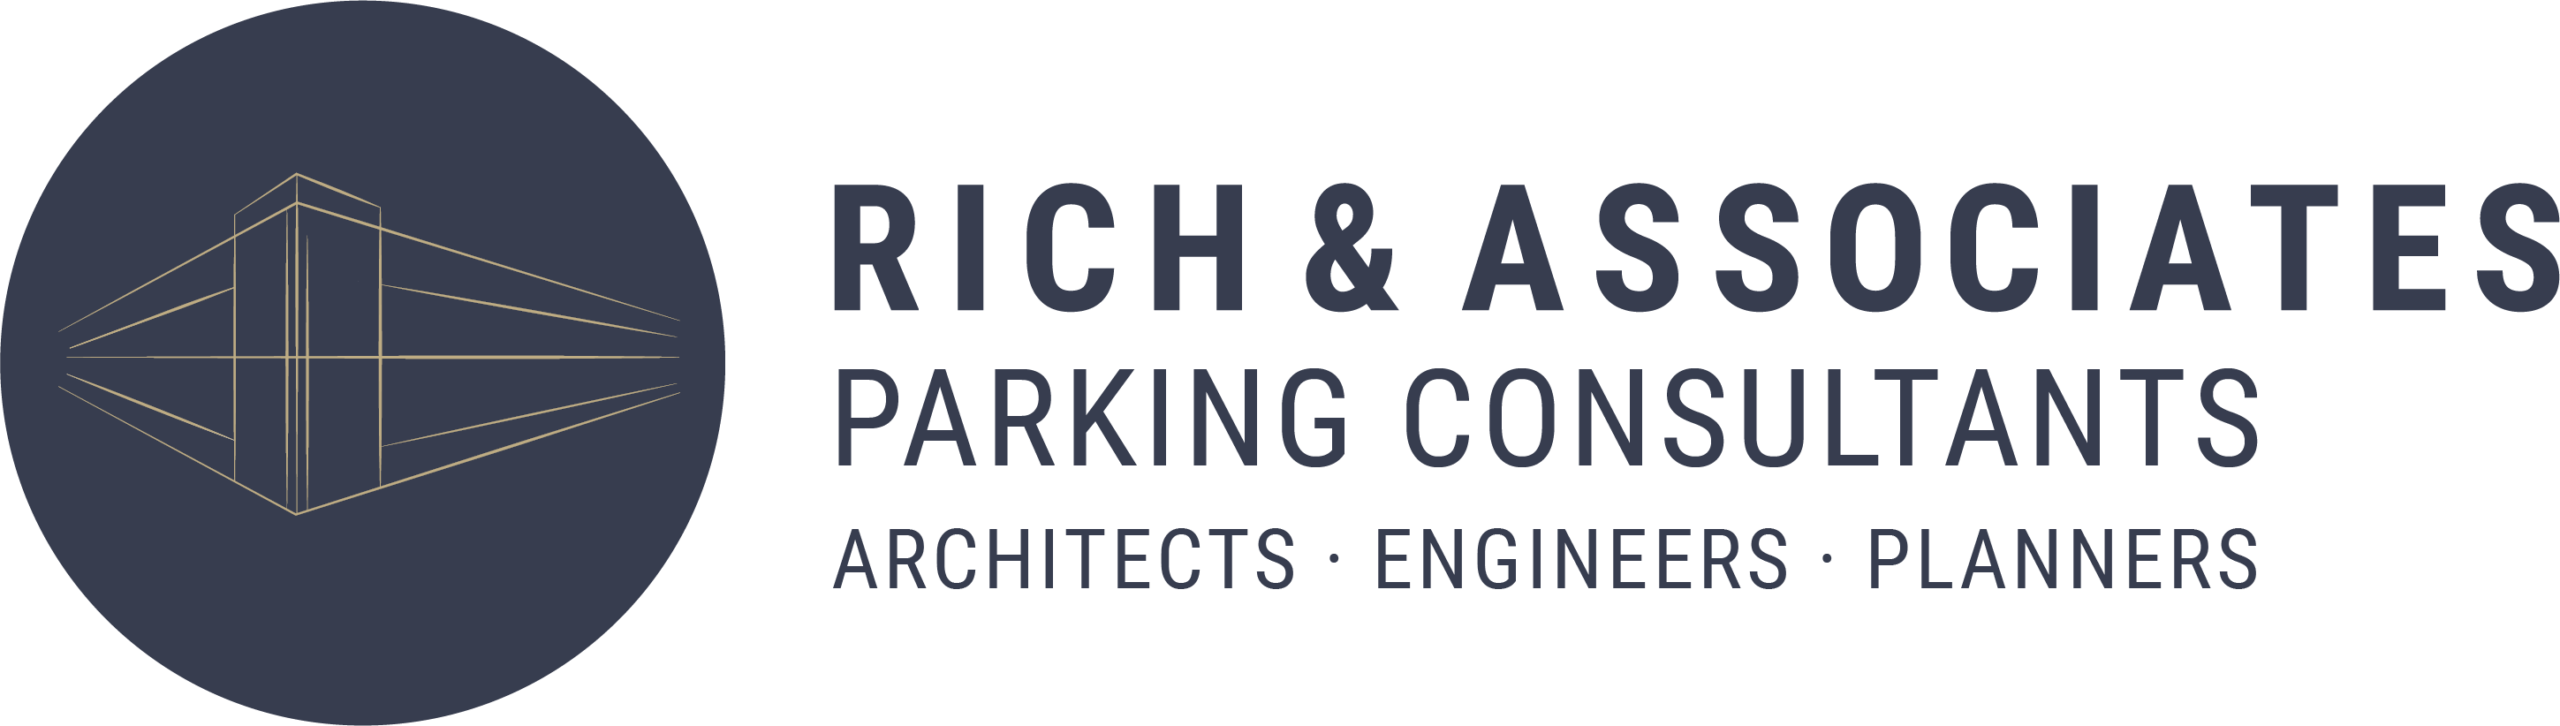 Rich & Associates logo